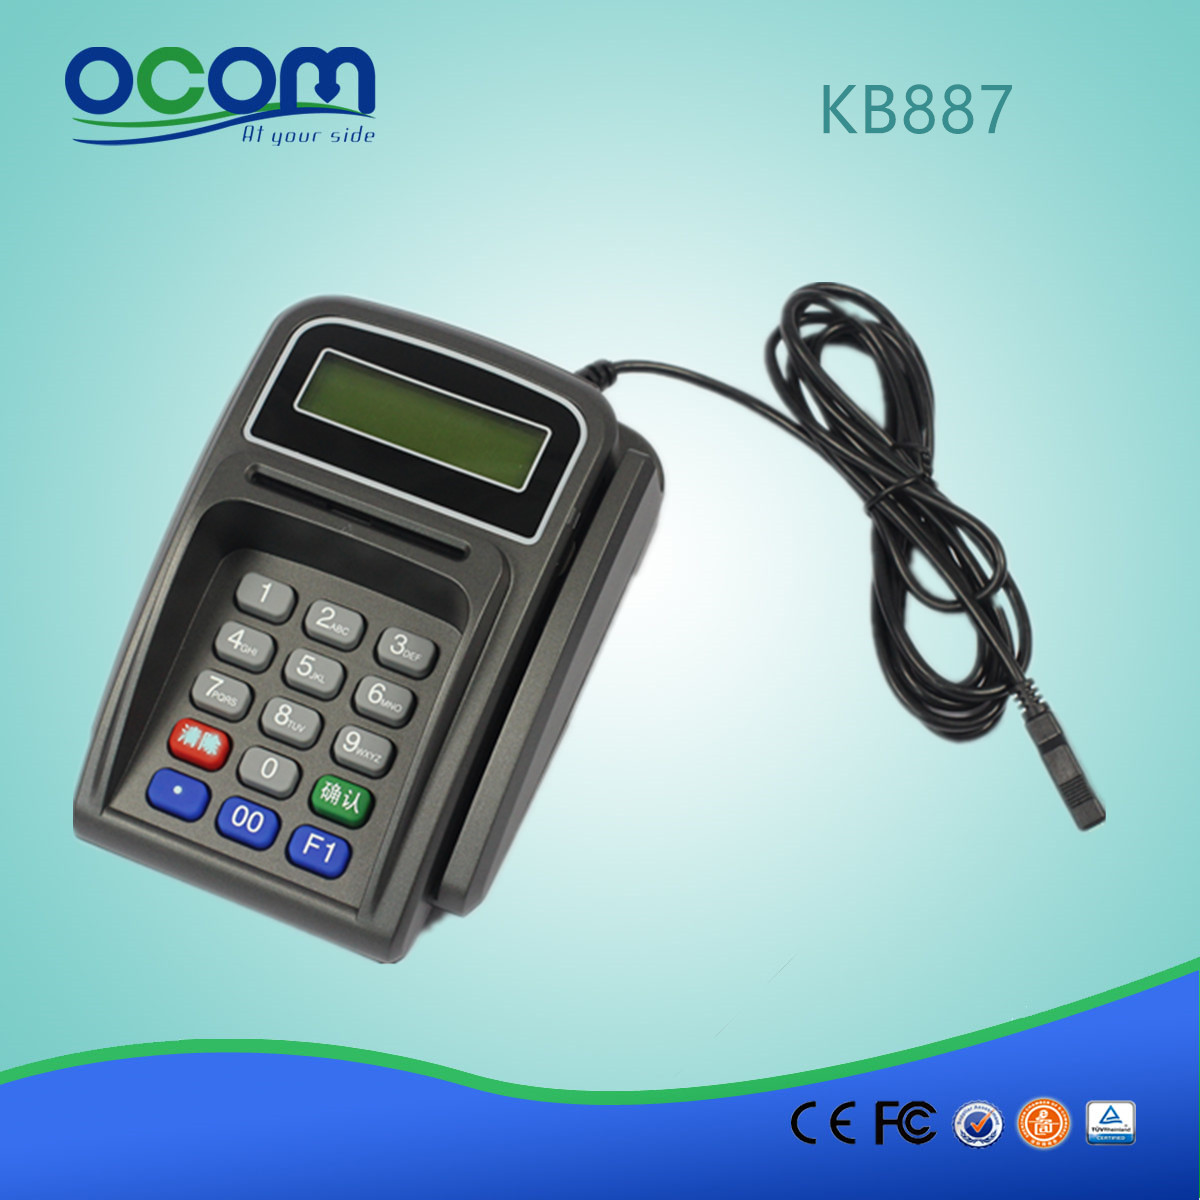 KB887 Μικρό προγραμματιζόμενο πληκτρολόγιο μαγνητικού πληκτρολογίου με αναγνώστη Smart Card Reader μαγνητικής κάρτας